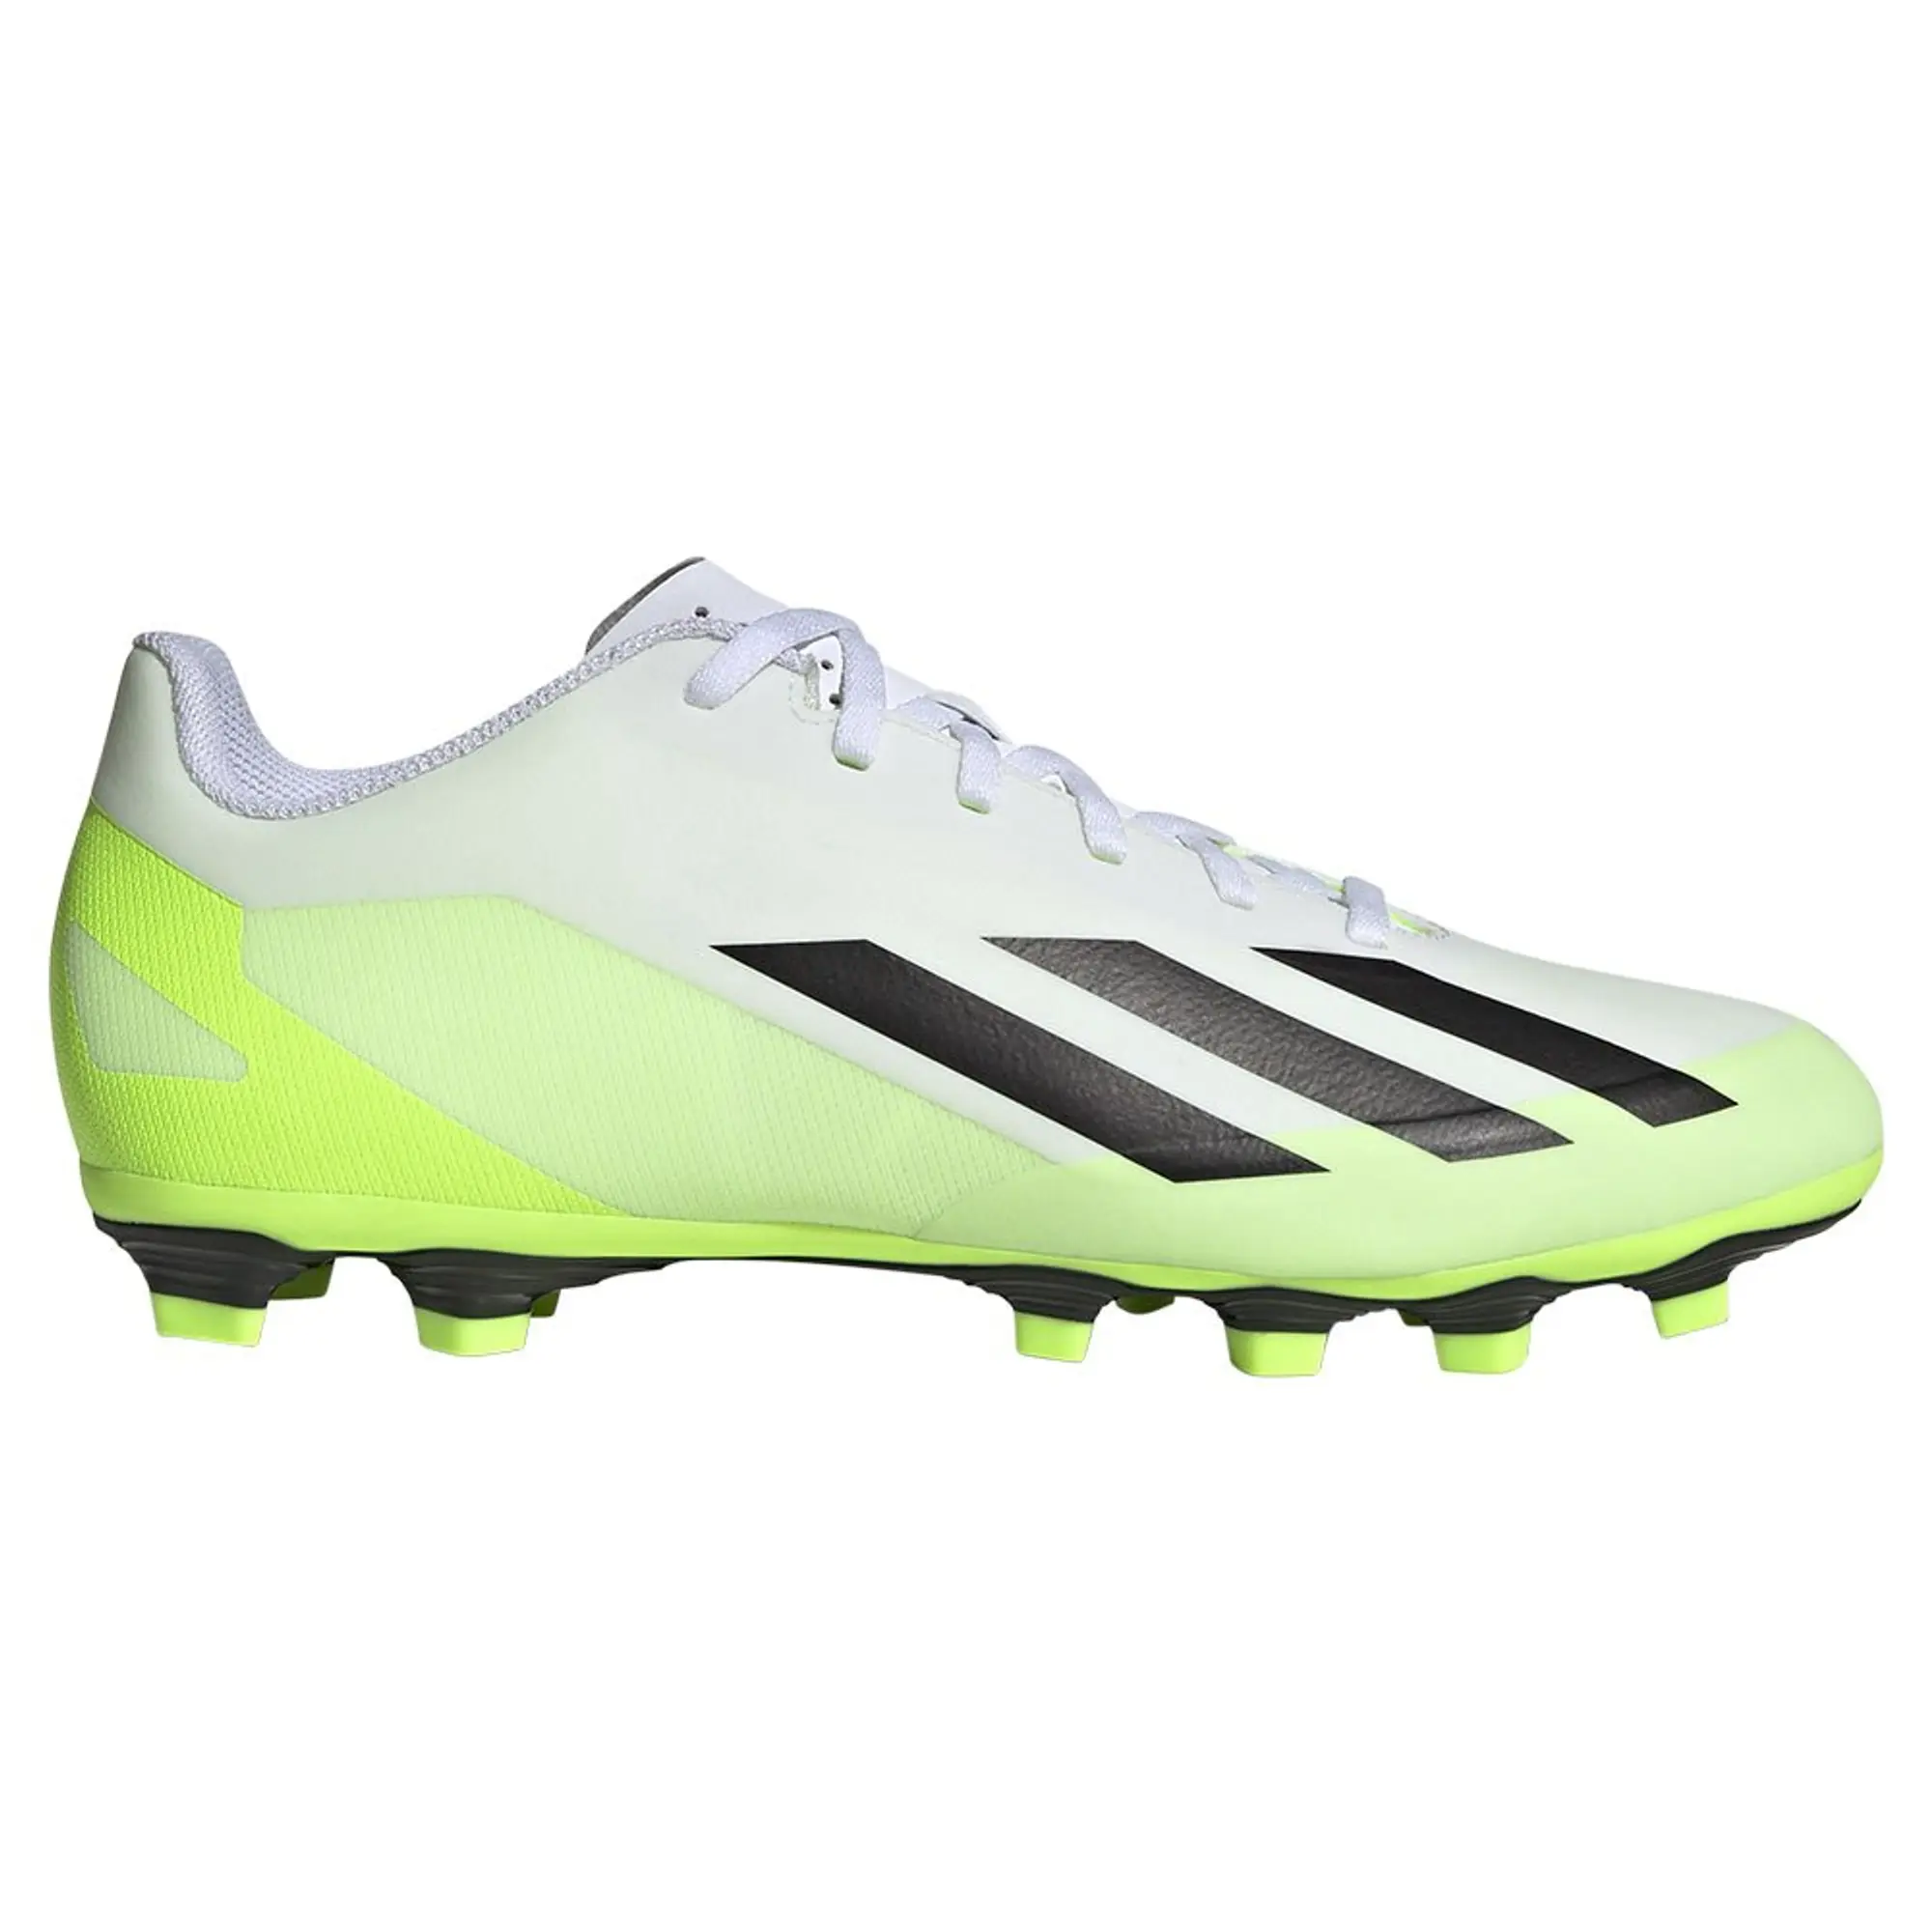 Adidas X Crazyfast.4 Fxg Football Boots  - White